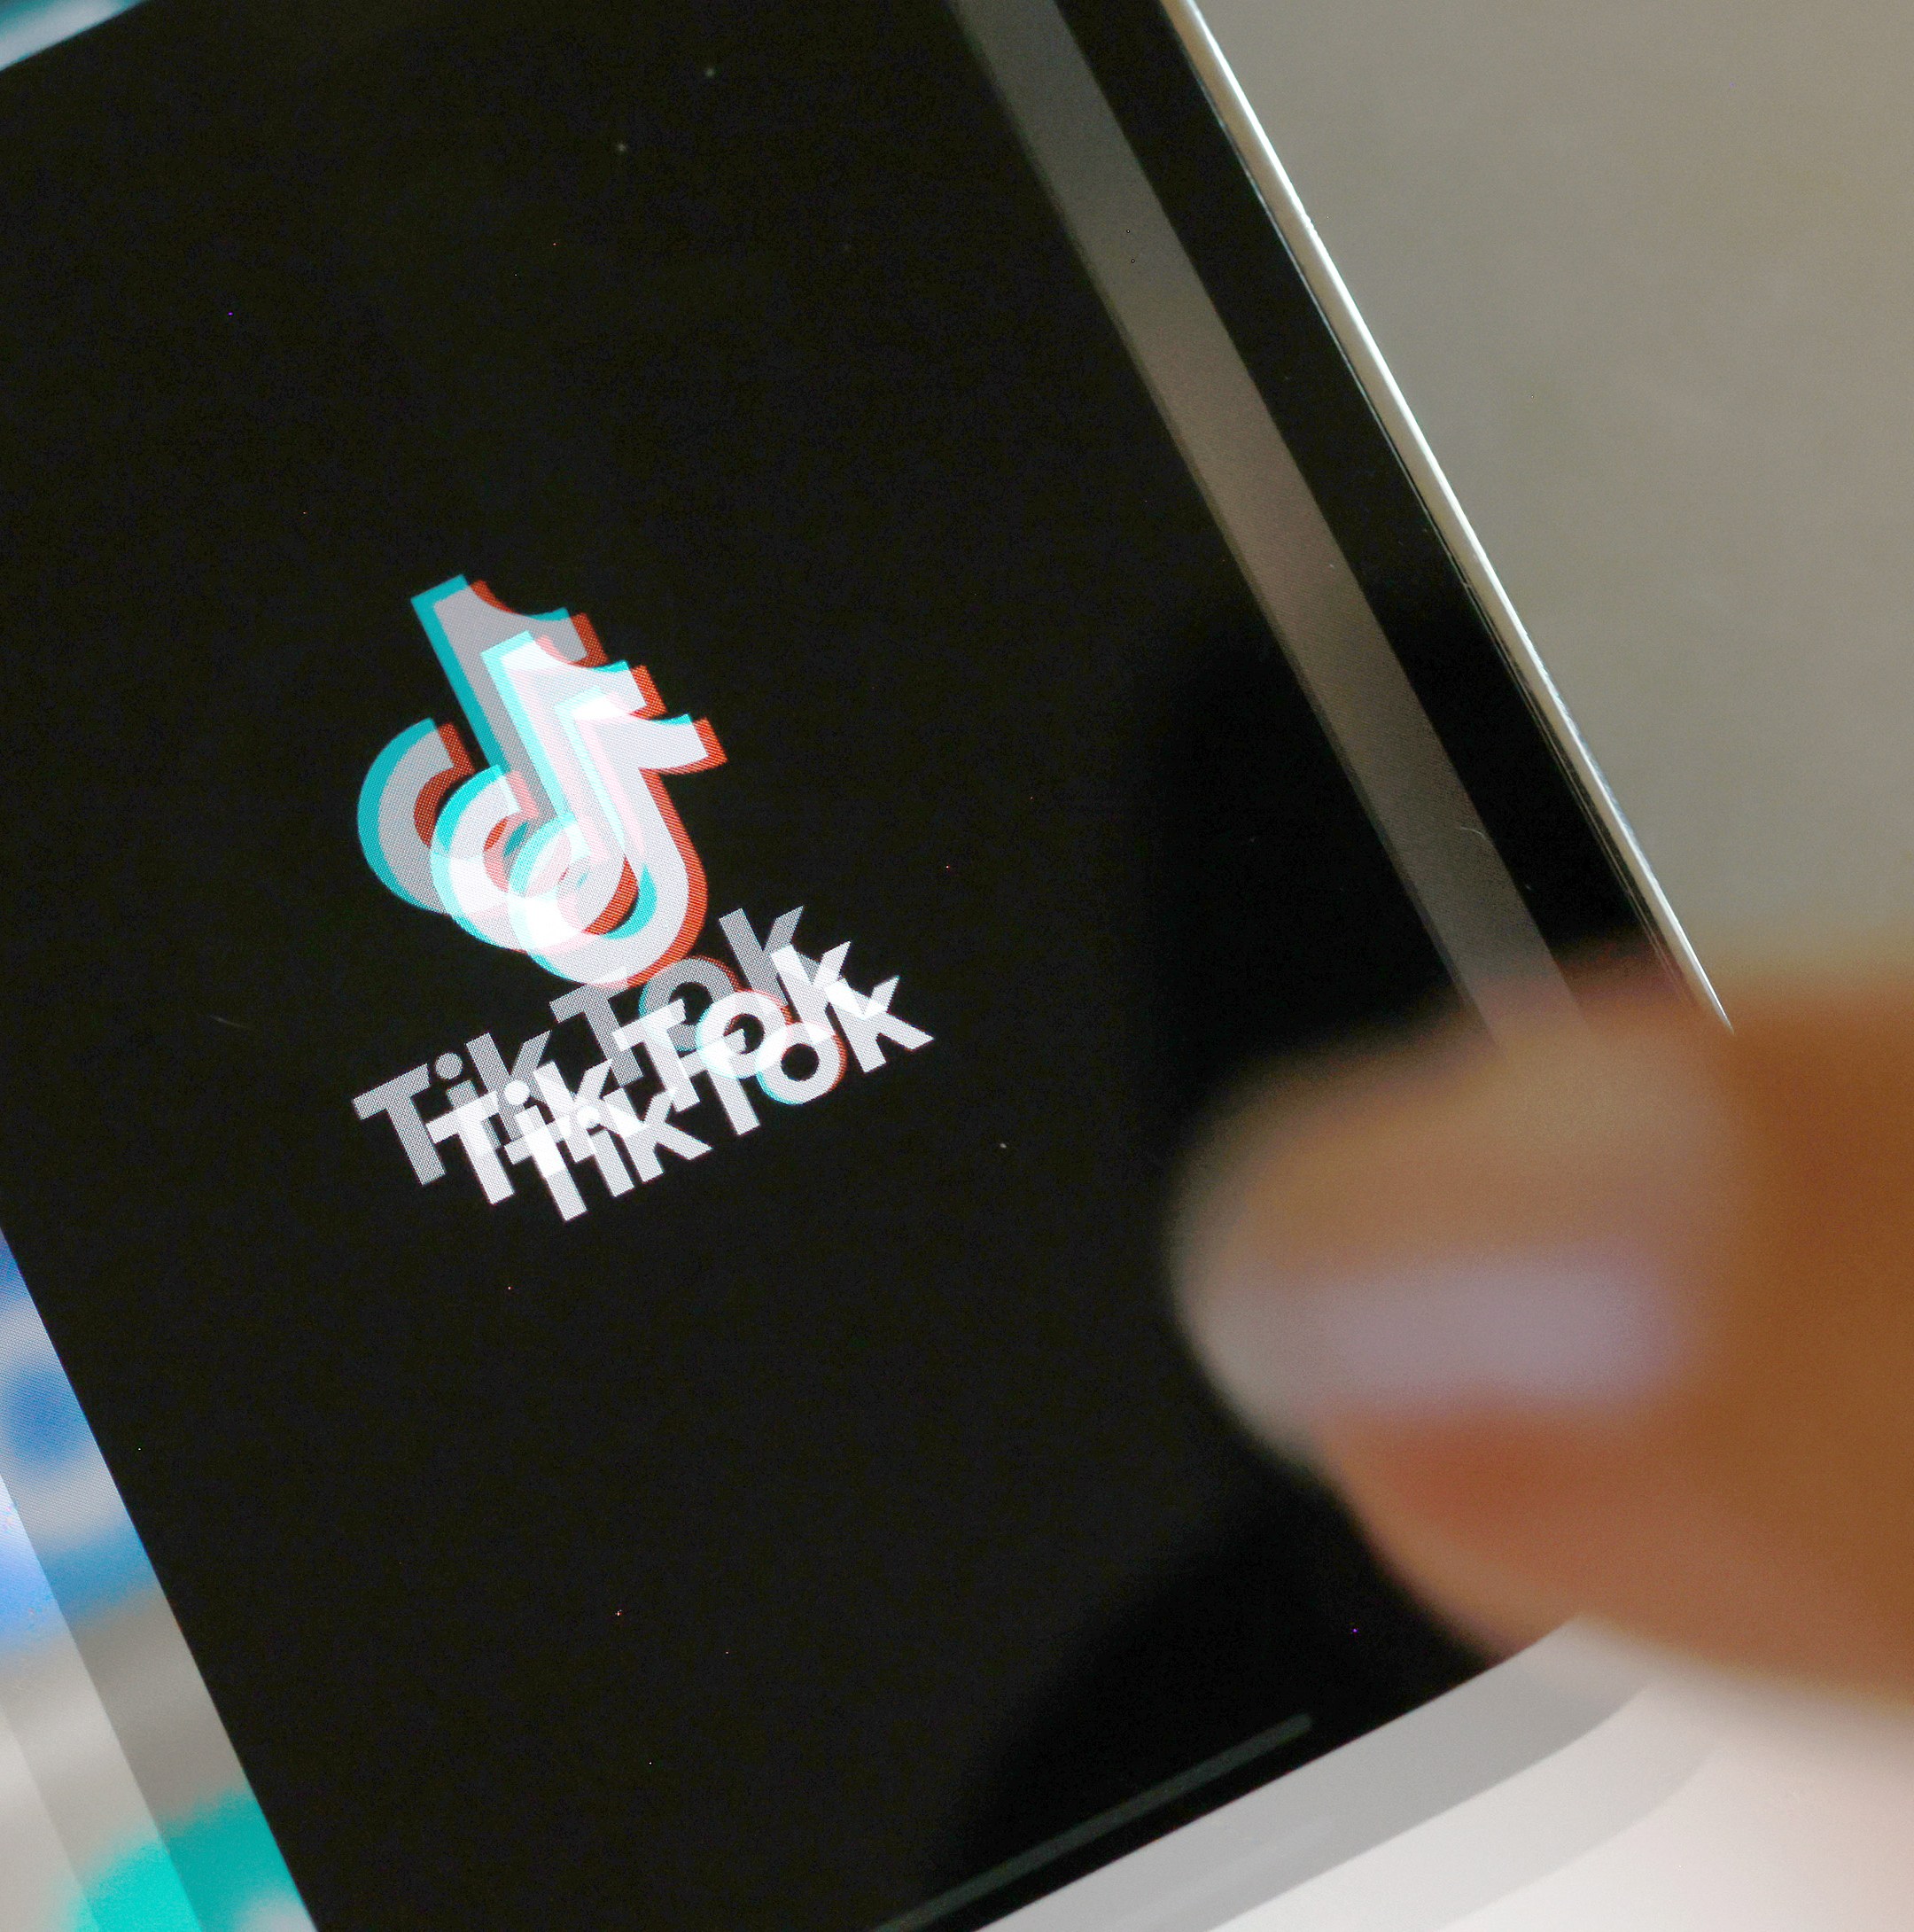 Imagining an internet without TikTok